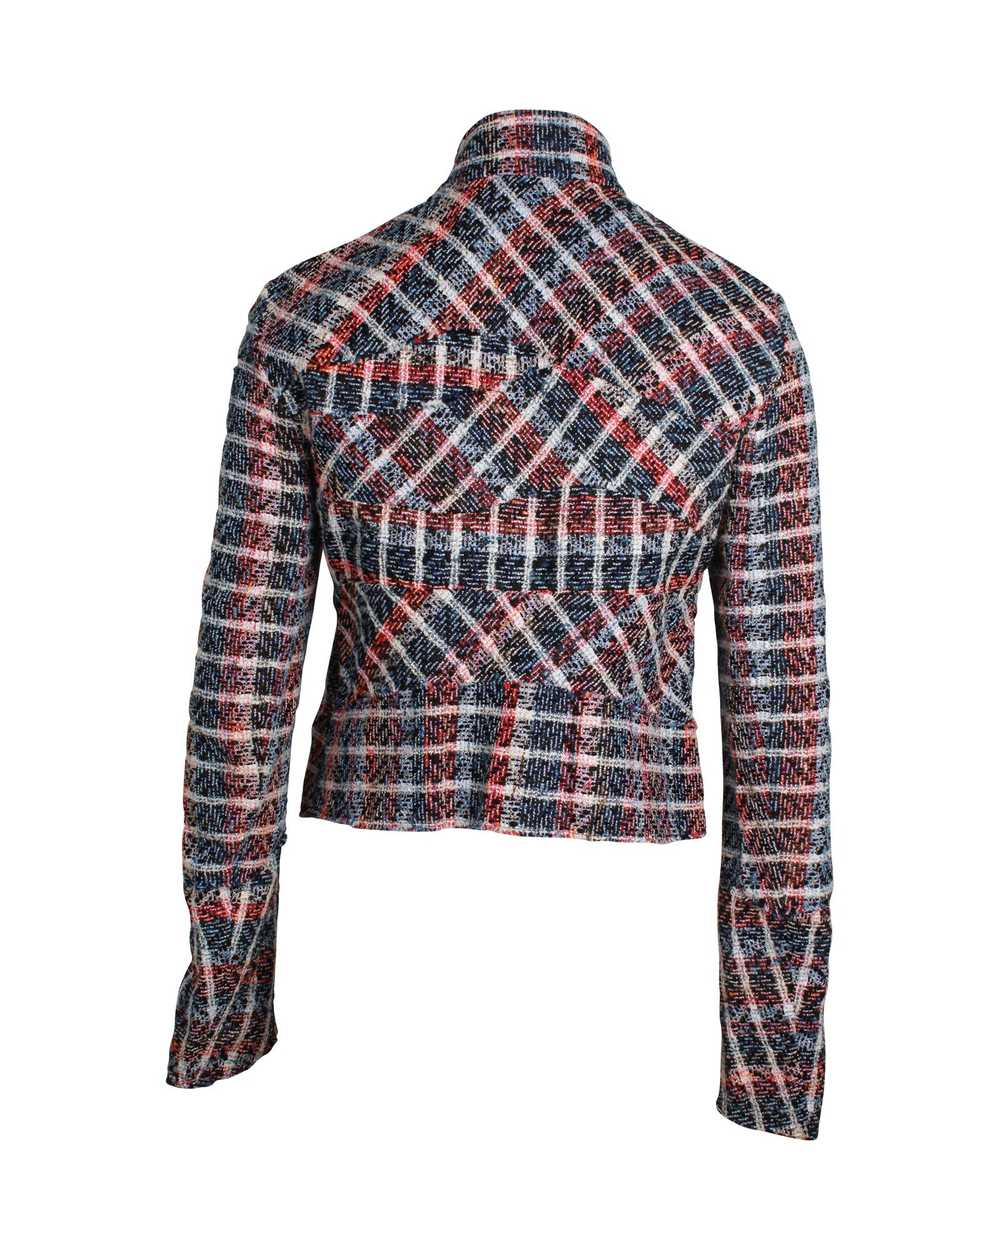 Product Details Multicoloured Cotton Tweed Jacket - image 3